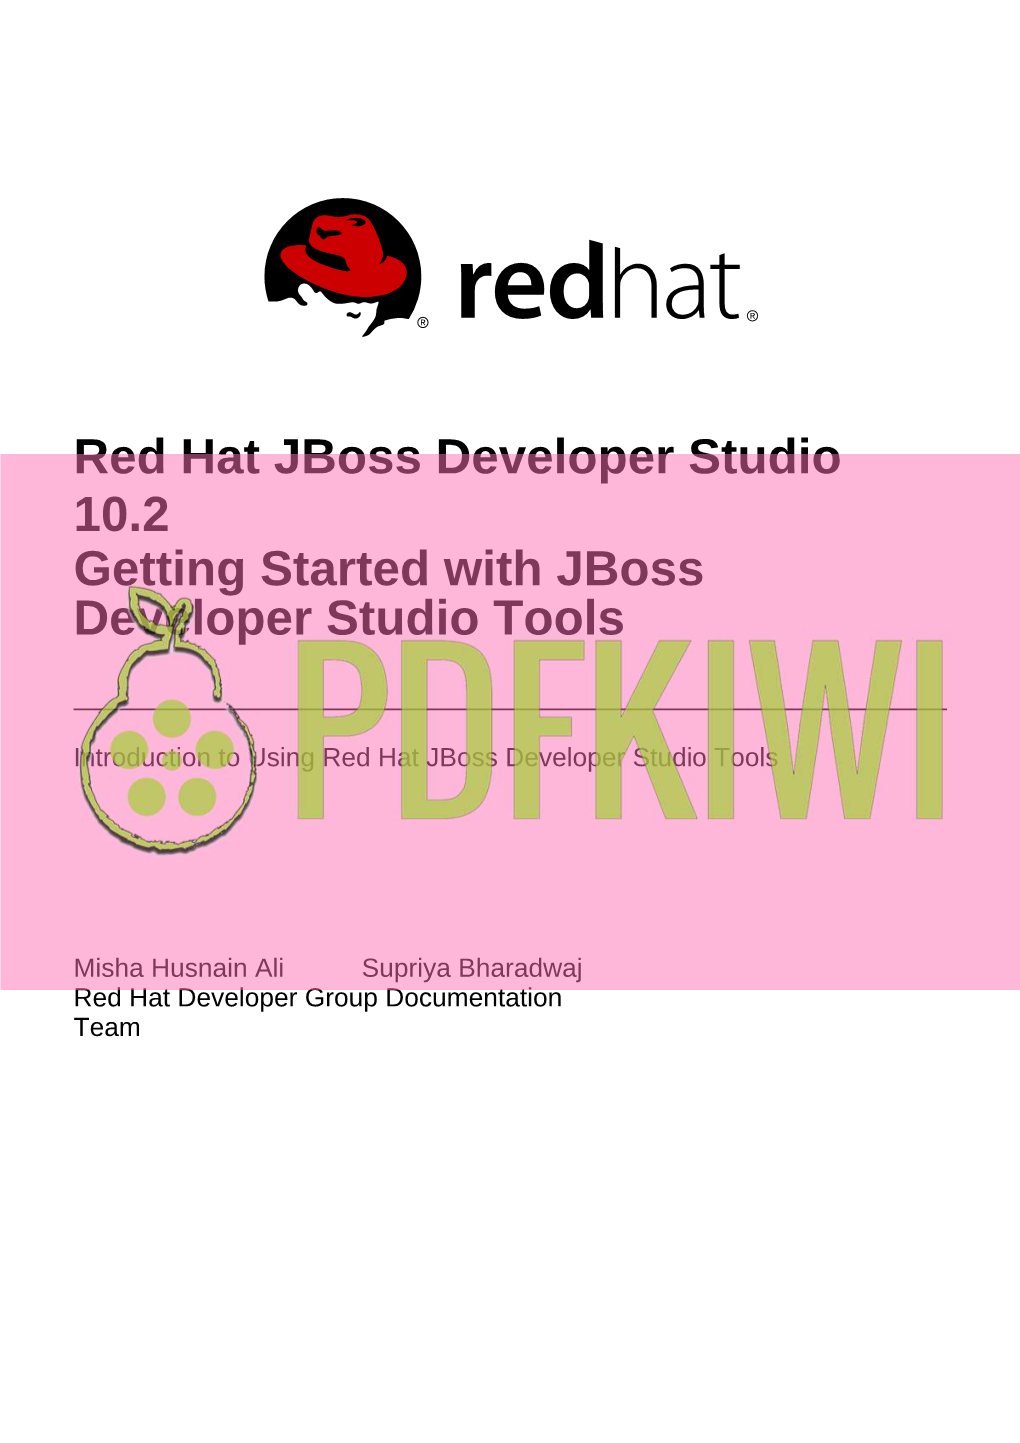 Red Hat Jboss Developer Studio 10.2 Getting Started with Jboss Developer Studio Tools